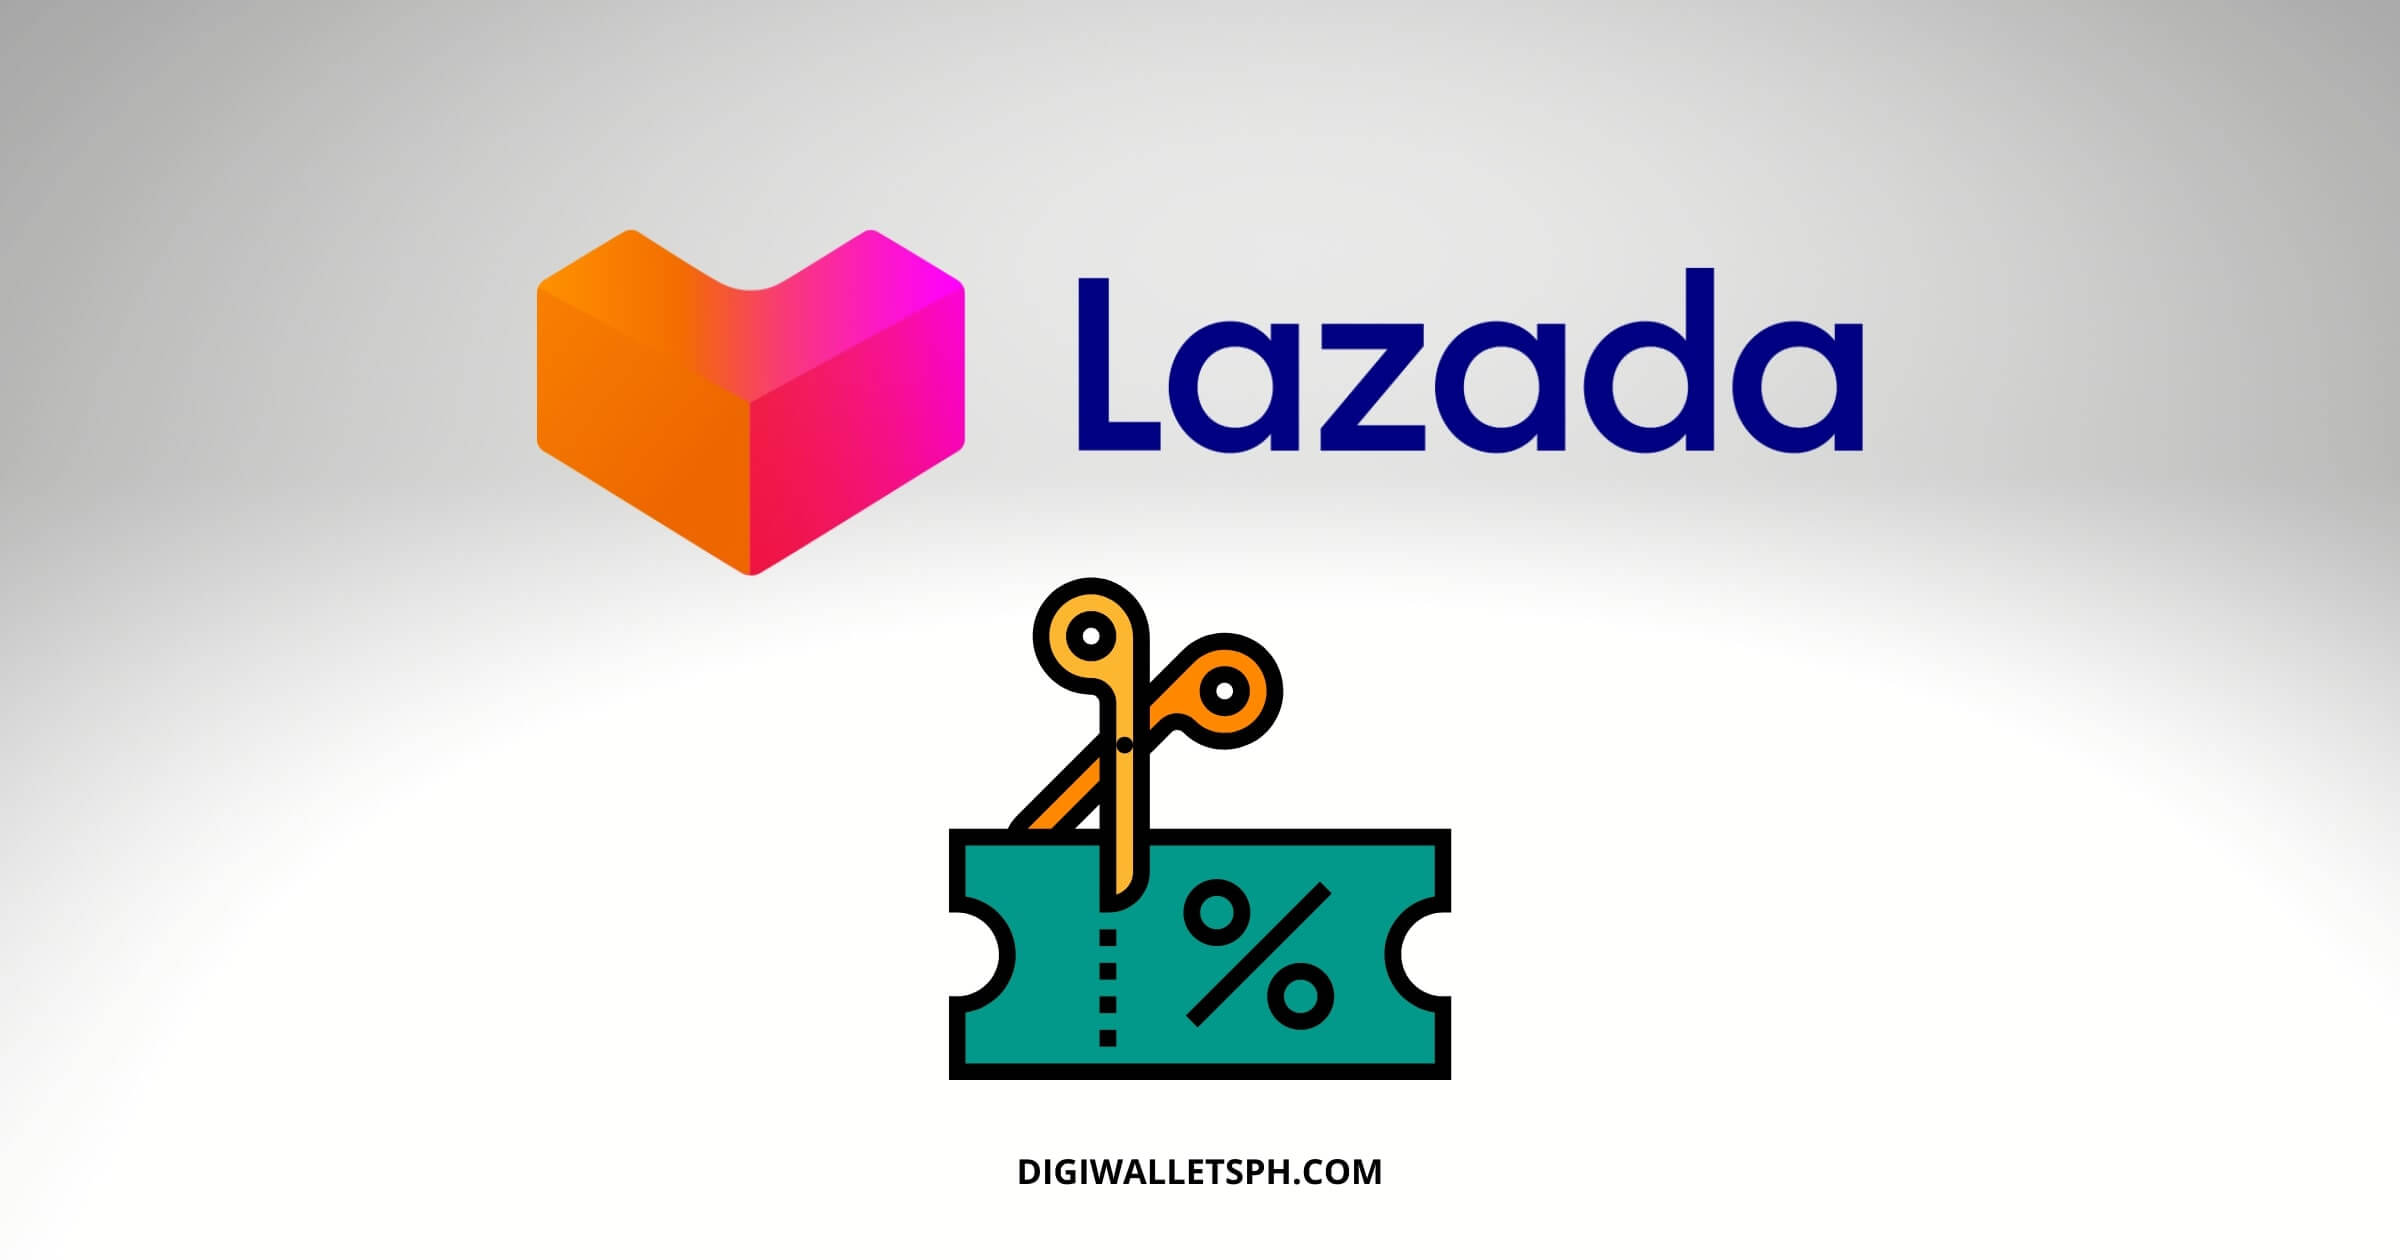 How to use Lazada wallet rebates